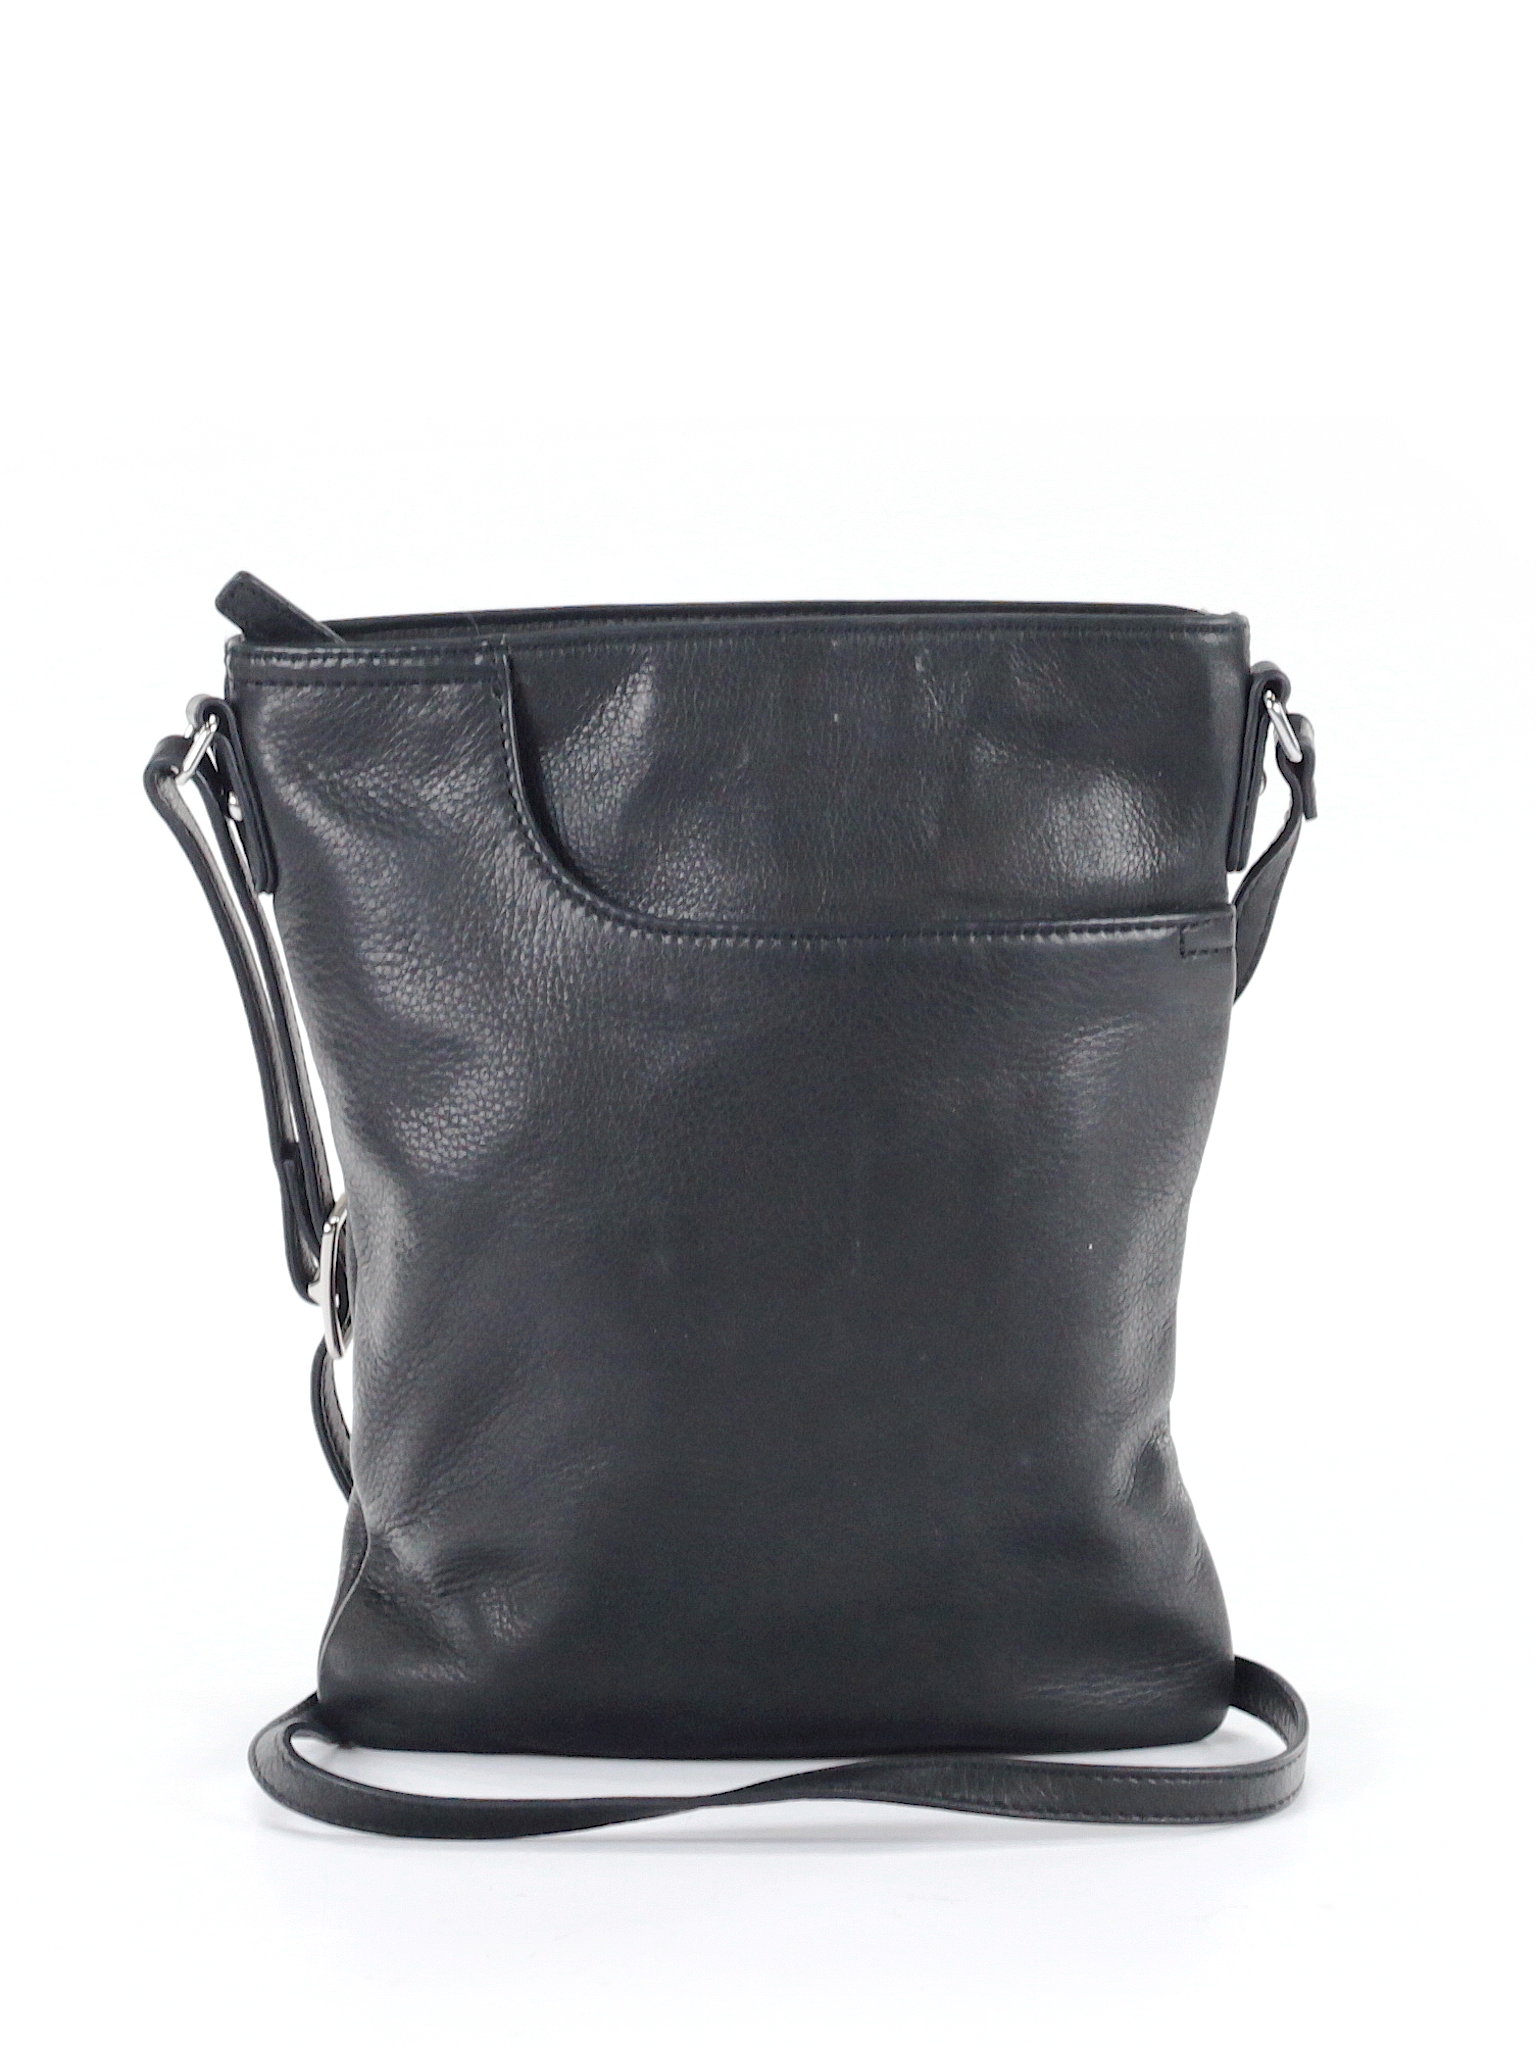 Margot Solid Black Leather Crossbody Bag One Size - 63% off | thredUP